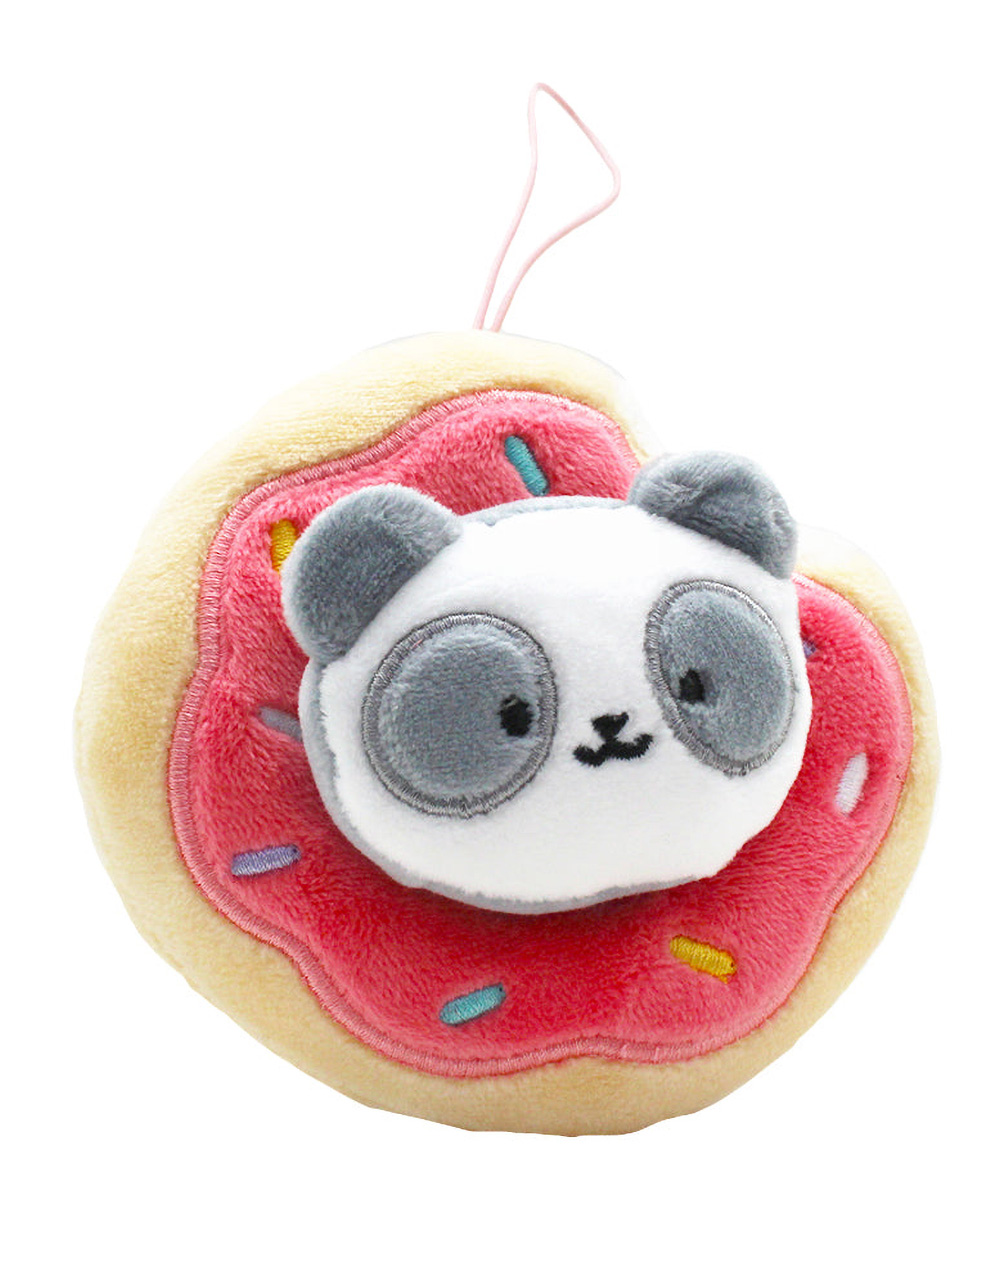 ANIROLLZ Donut Pandaroll 4" Plush Keychain